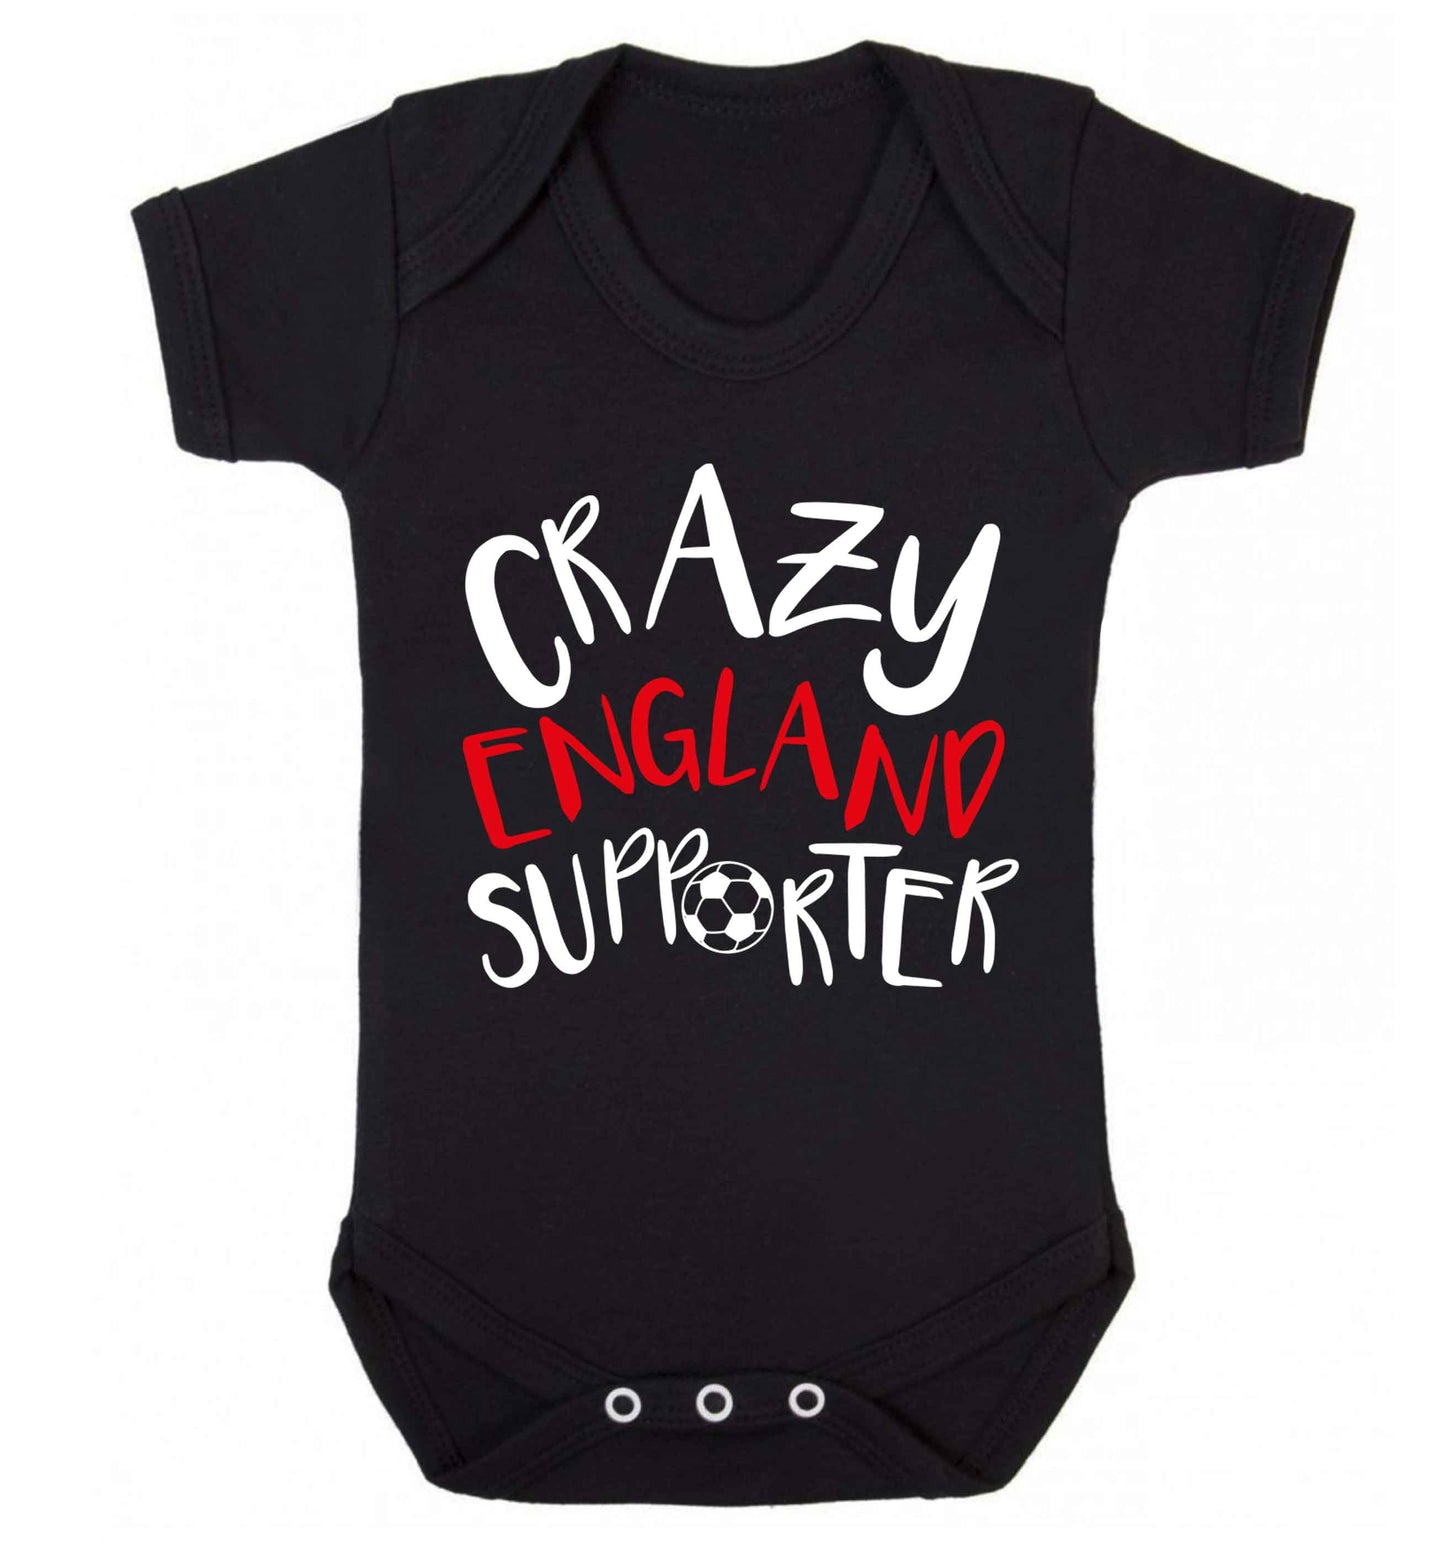 Crazy England supporter Baby Vest black 18-24 months